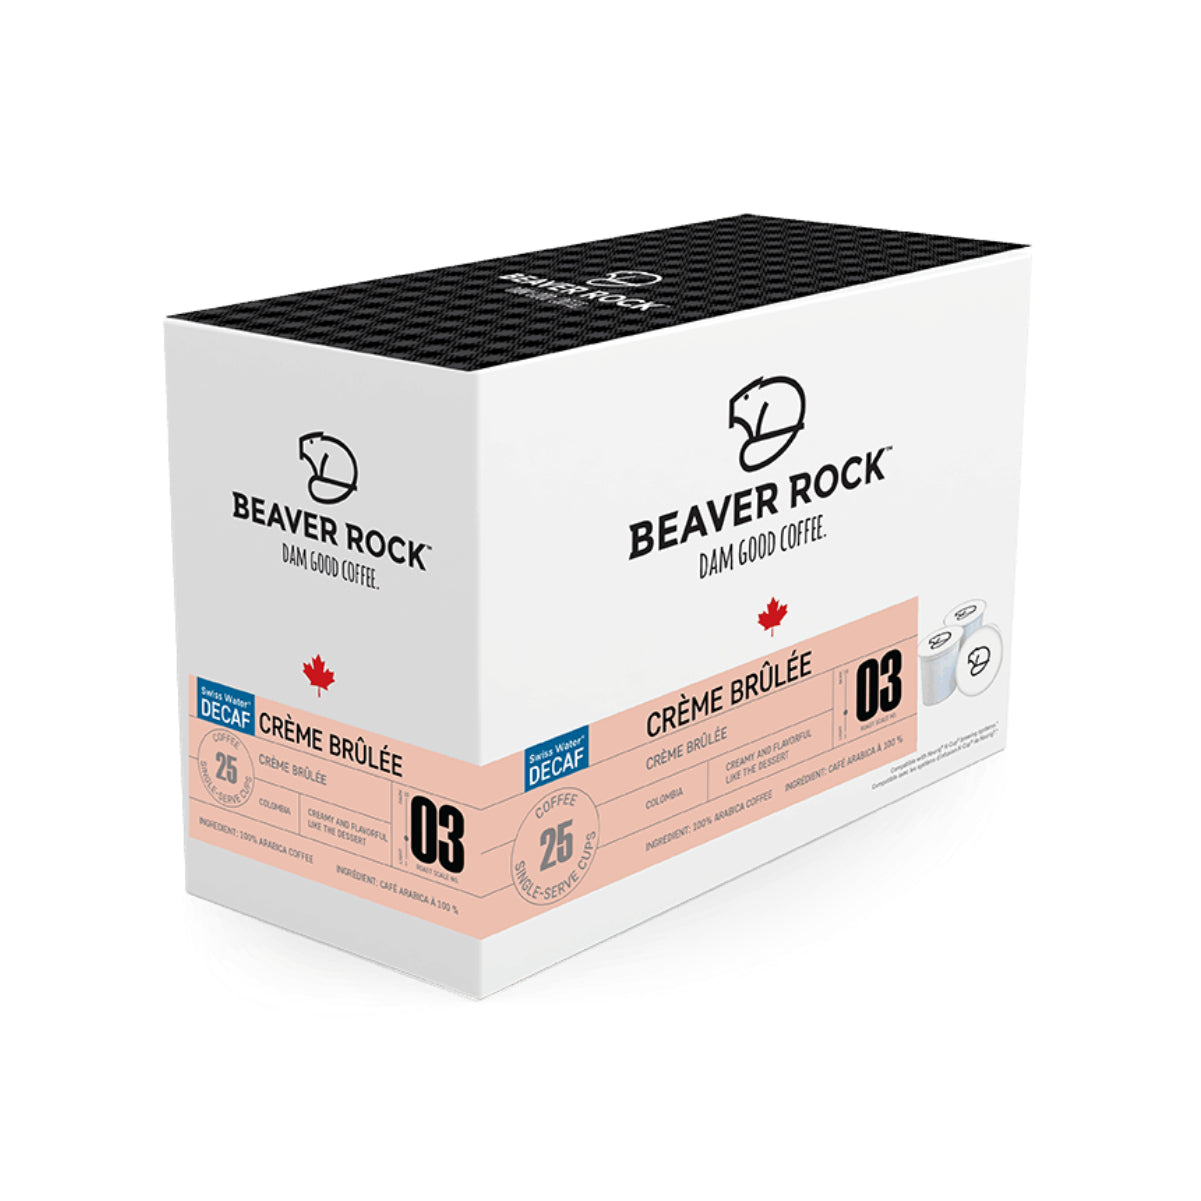 Beaver Rock Crème Brûlée Decaf Single-Serve Coffee Pods